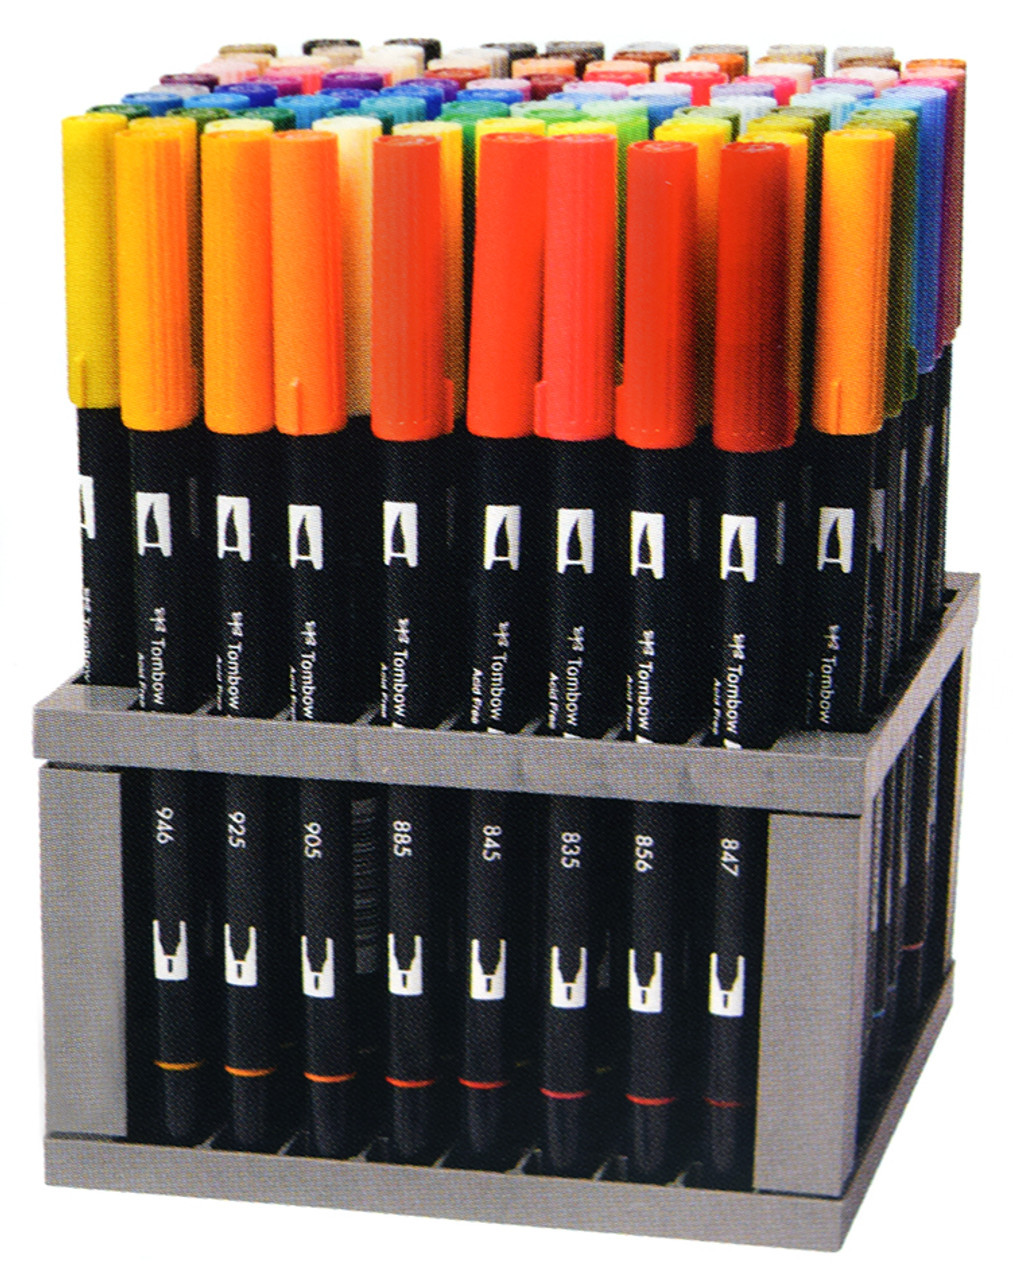 Tombow Dual Brush Pen Set of 6- Red Blendables - John Neal Books